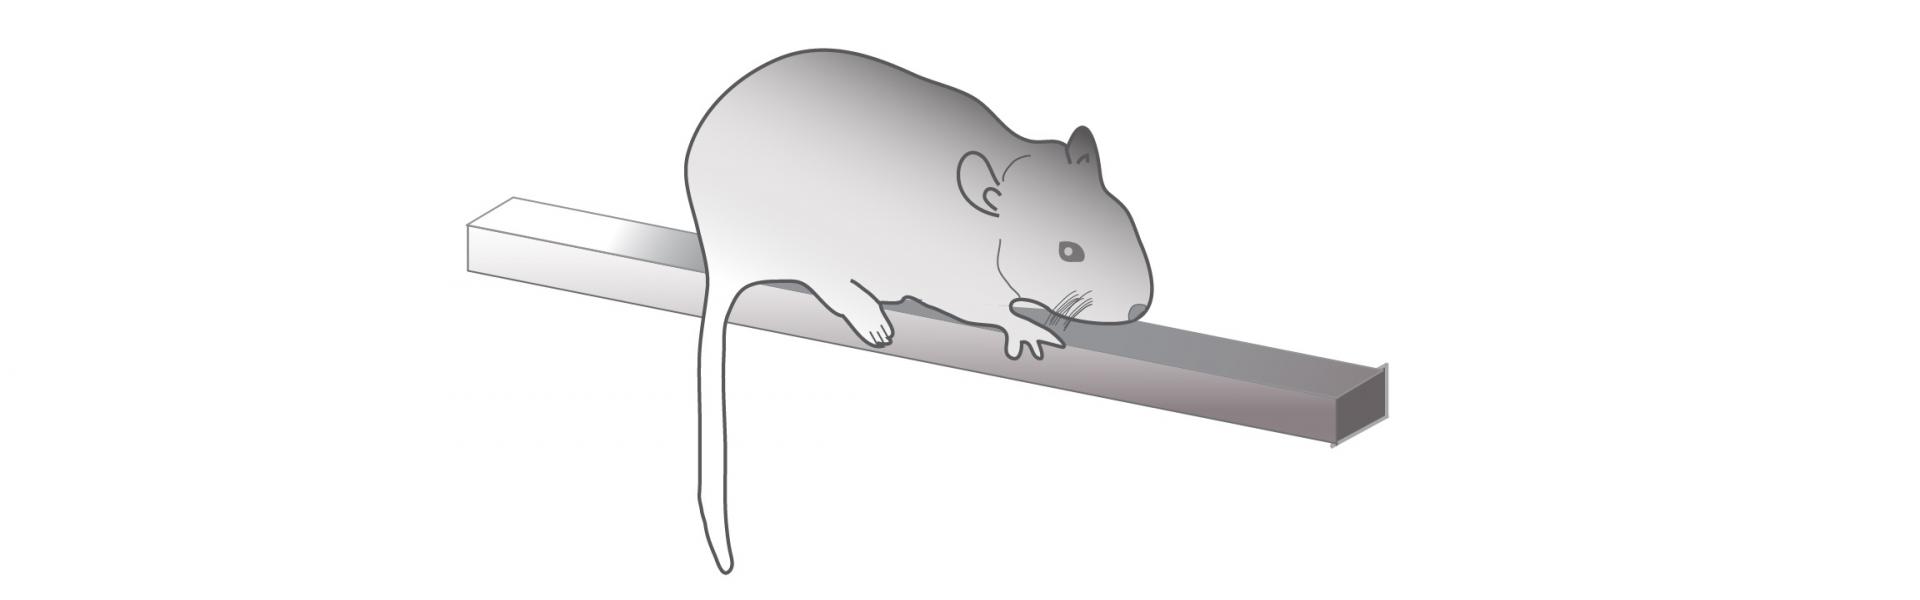 Mouse on a balance beam